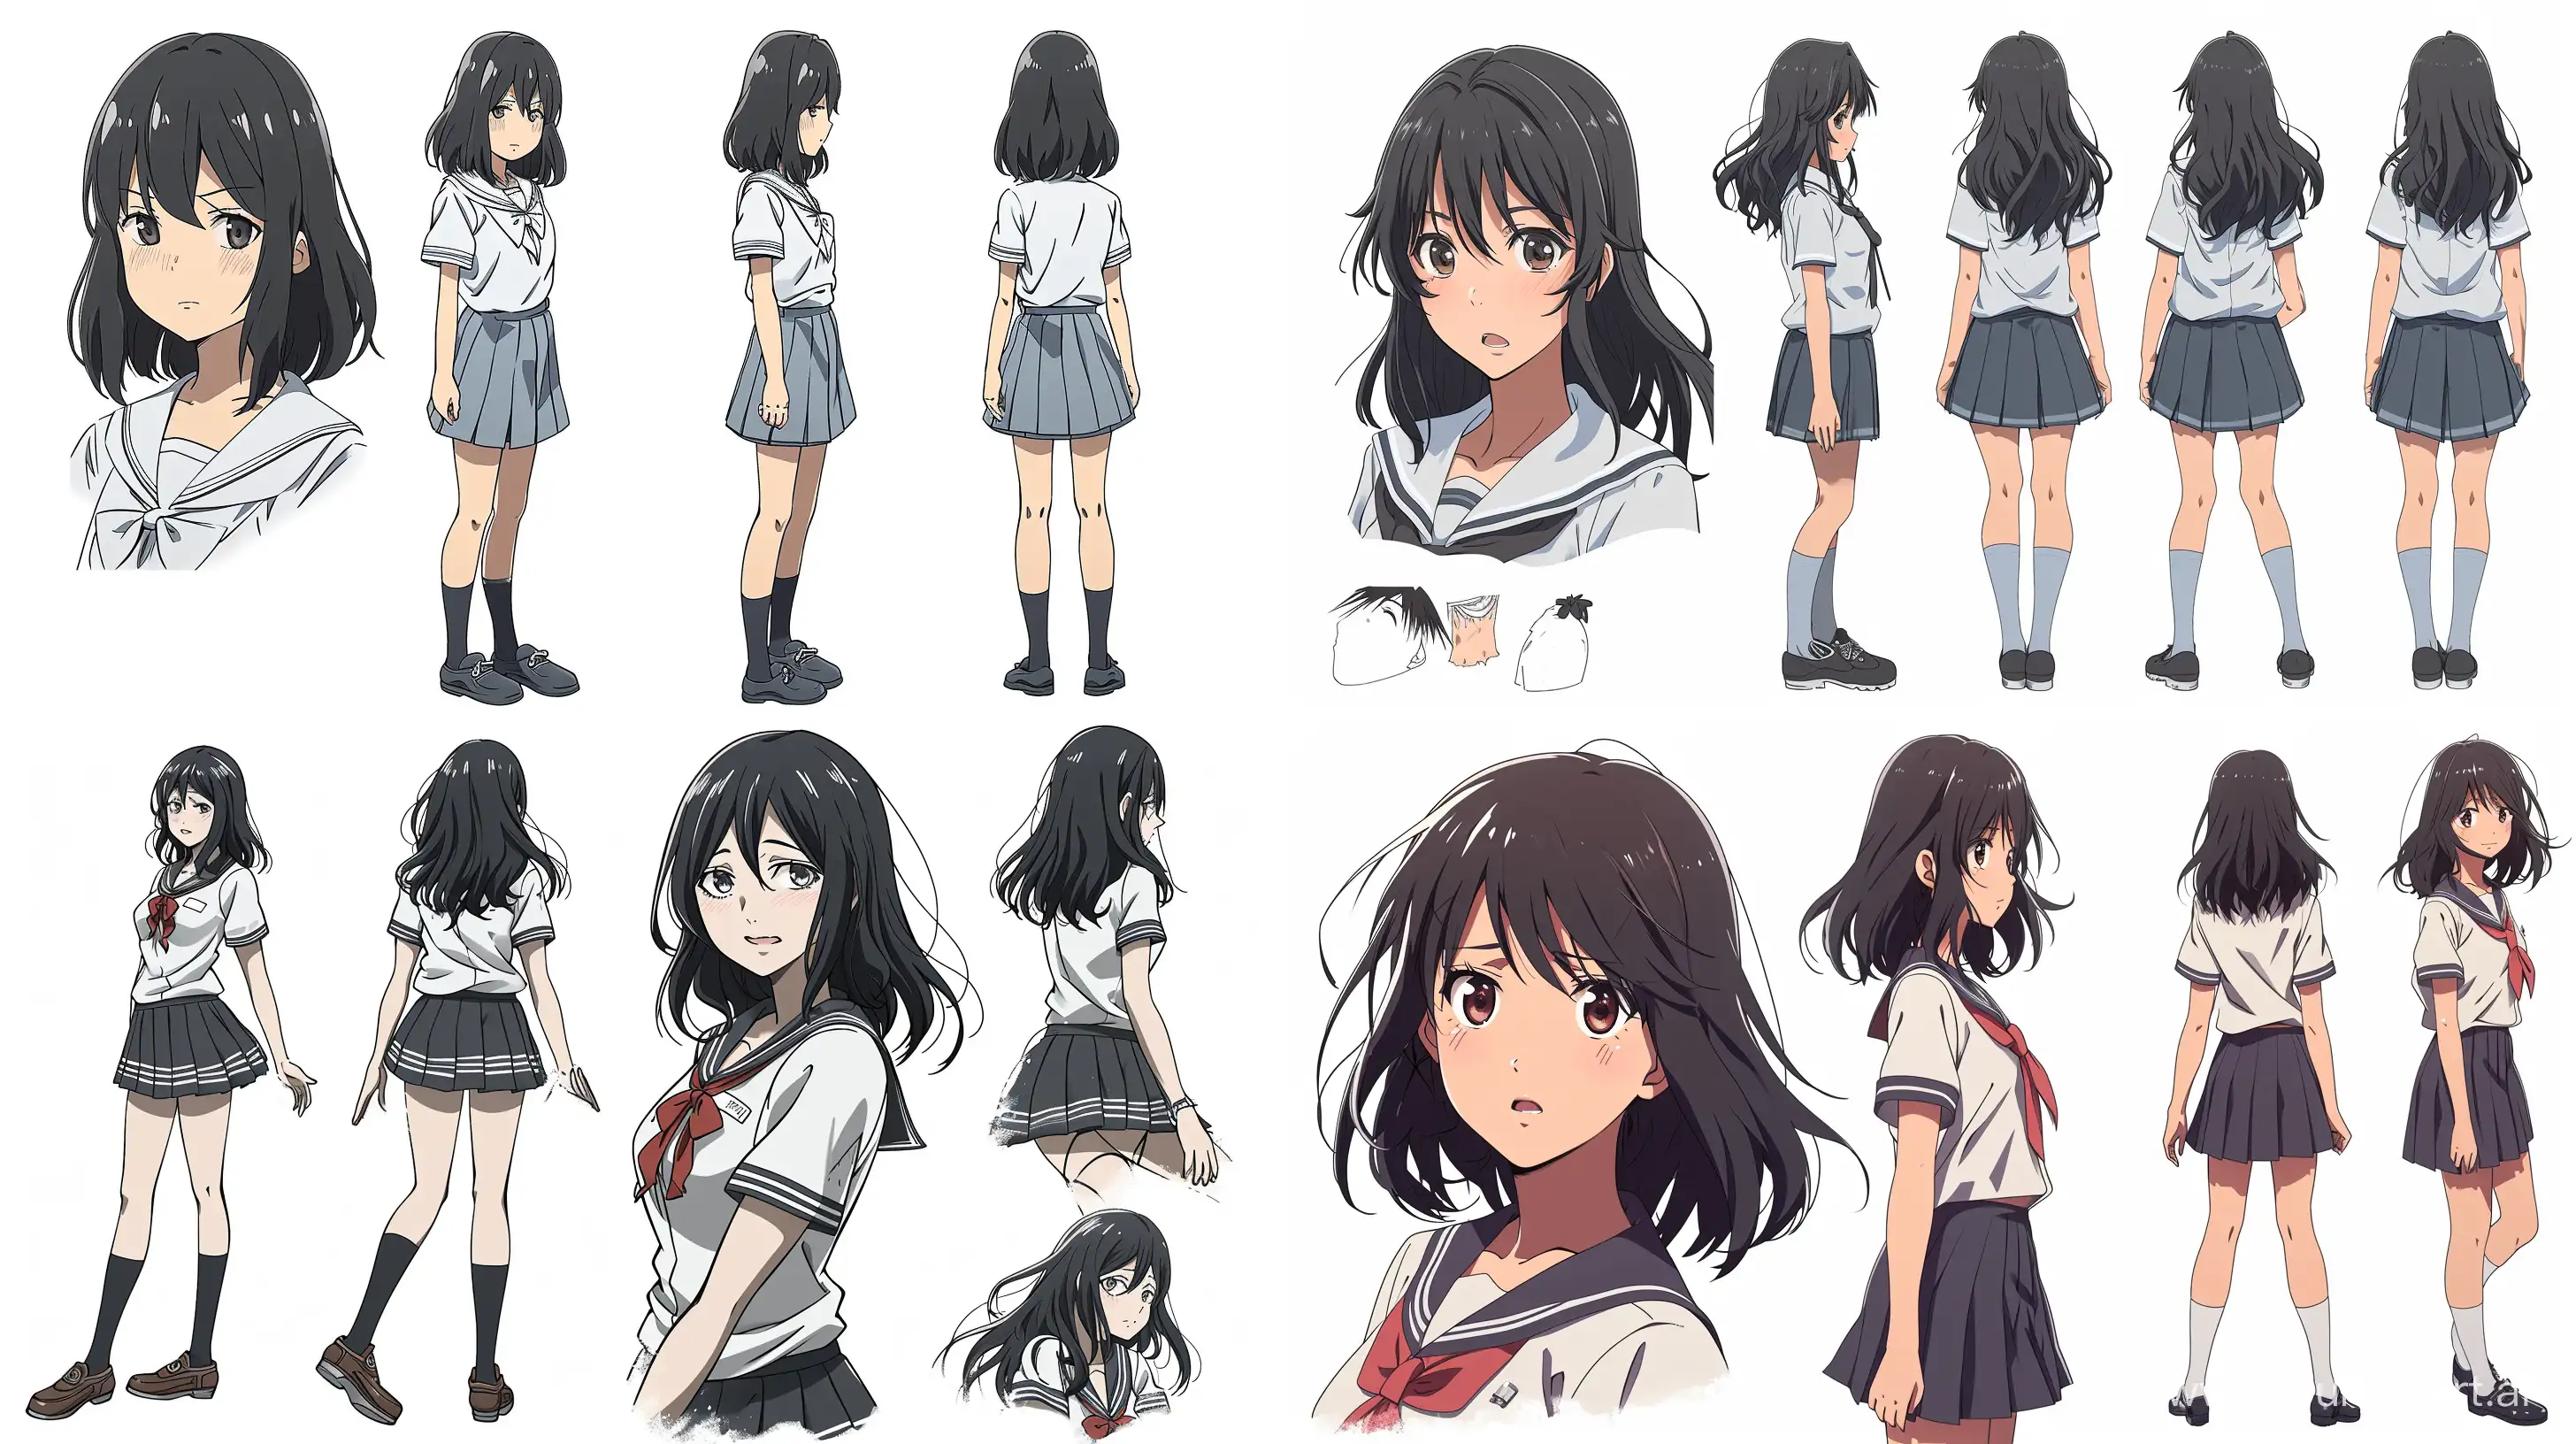 Stylish-High-School-Girl-Intelligent-Curvy-Anime-Character-Sheet